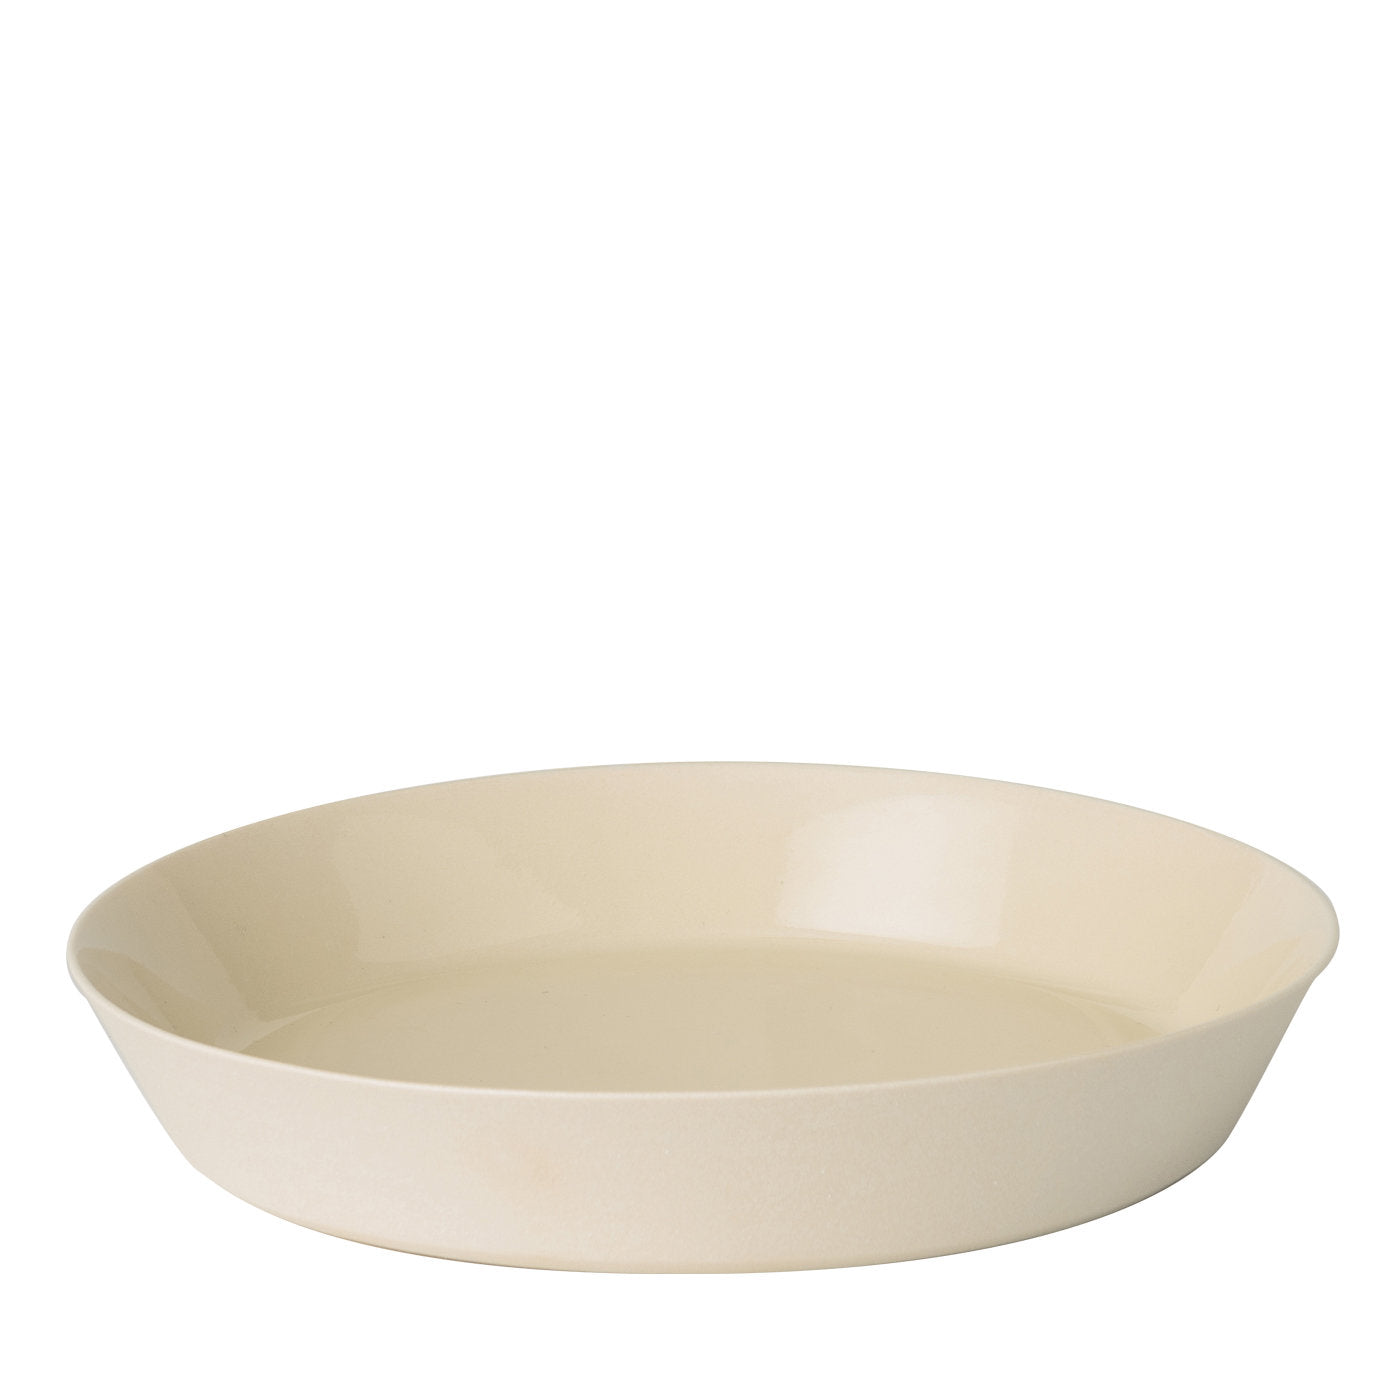 Set of 4 White Ceramic Pasta Bowls - Main view